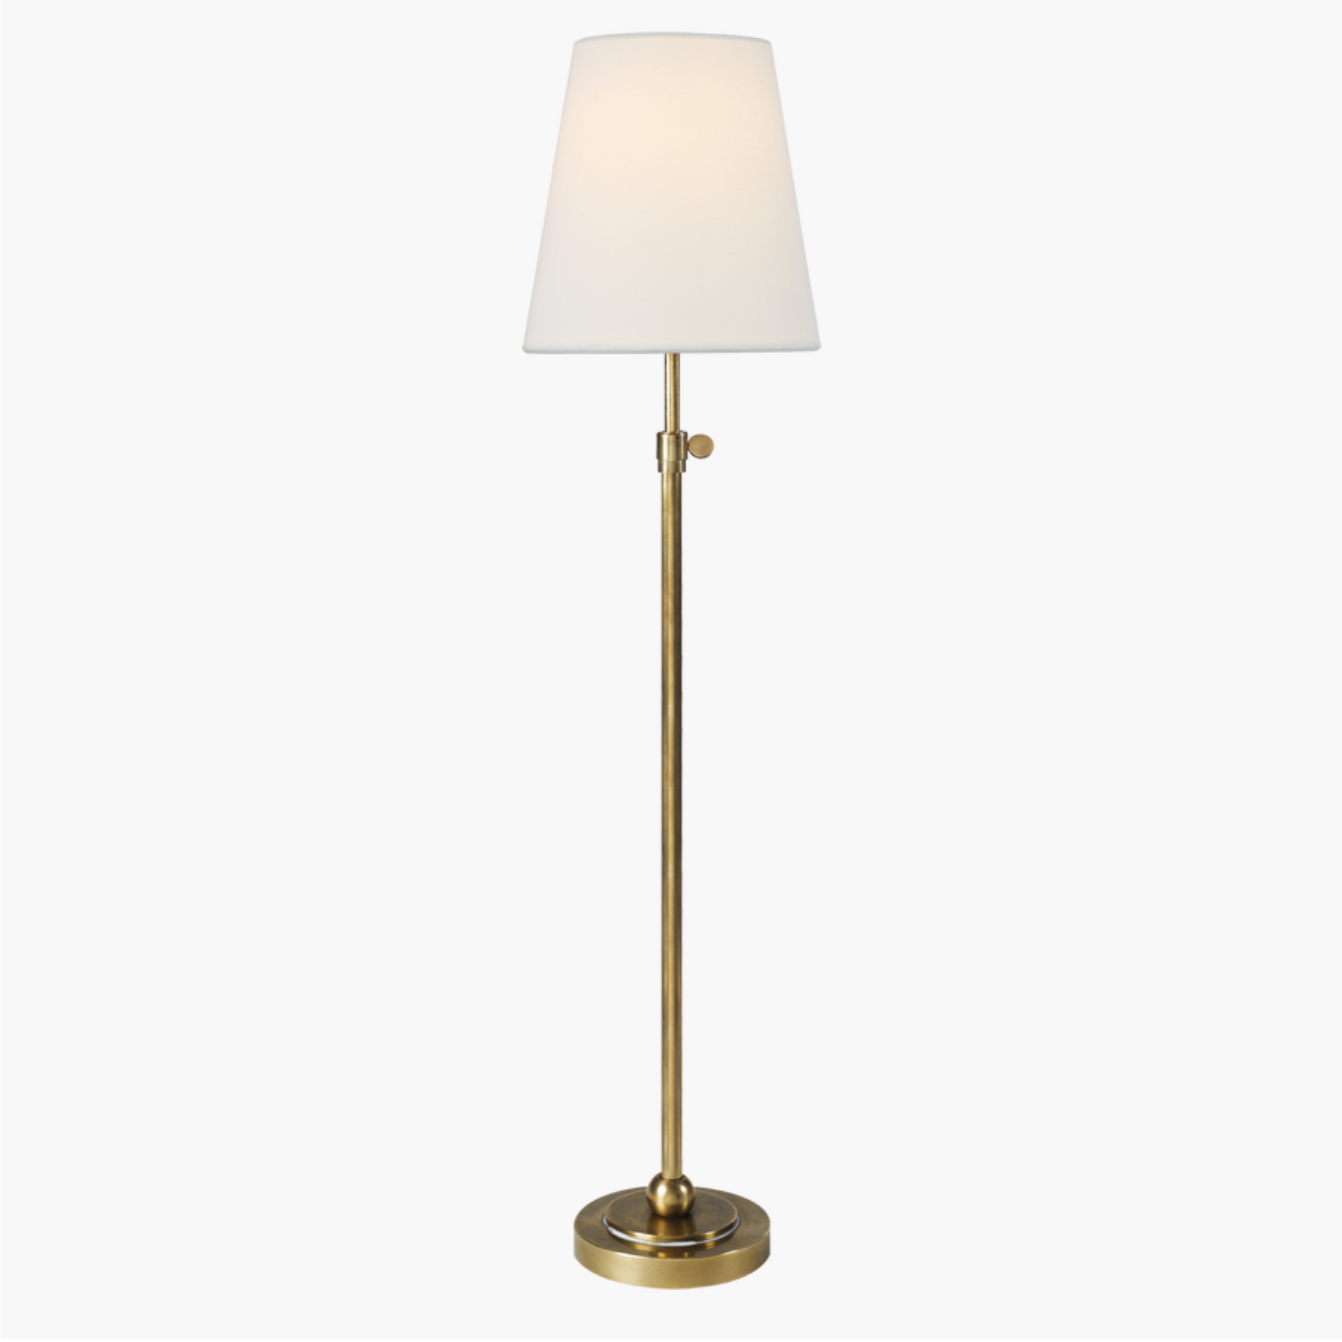 Visual Comfort & Co. Bryant Table Lamp